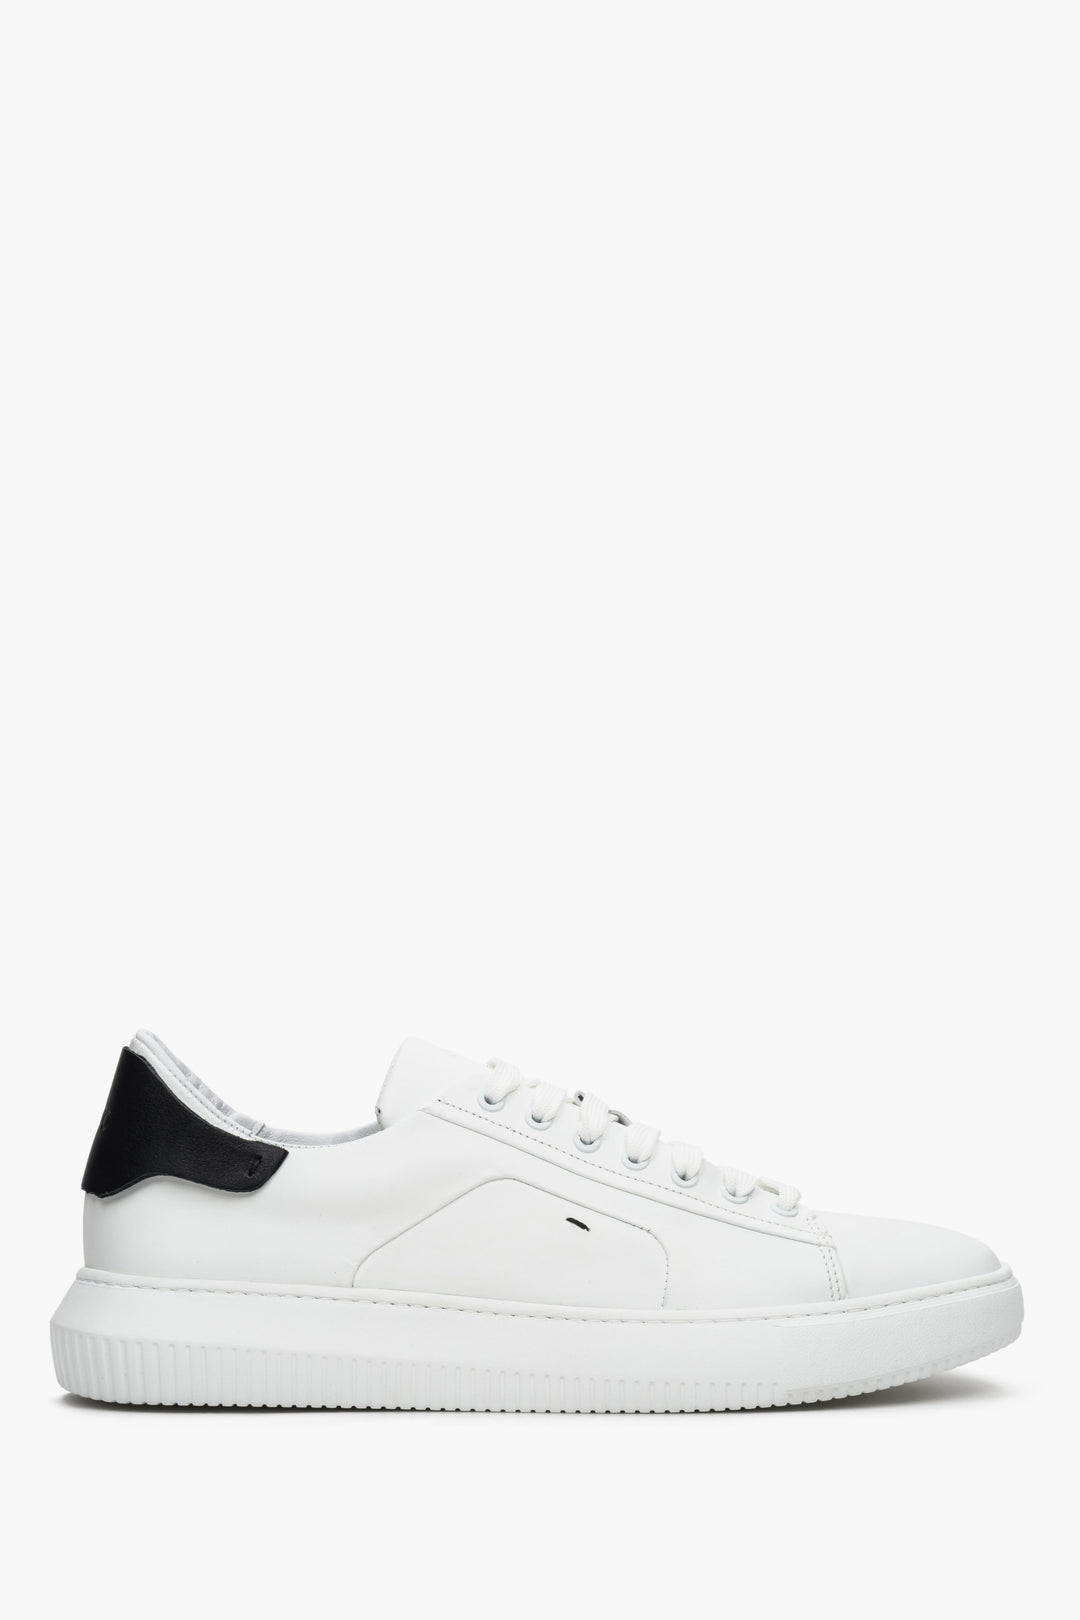 Stylish men's sneakers in white - shoe profile.